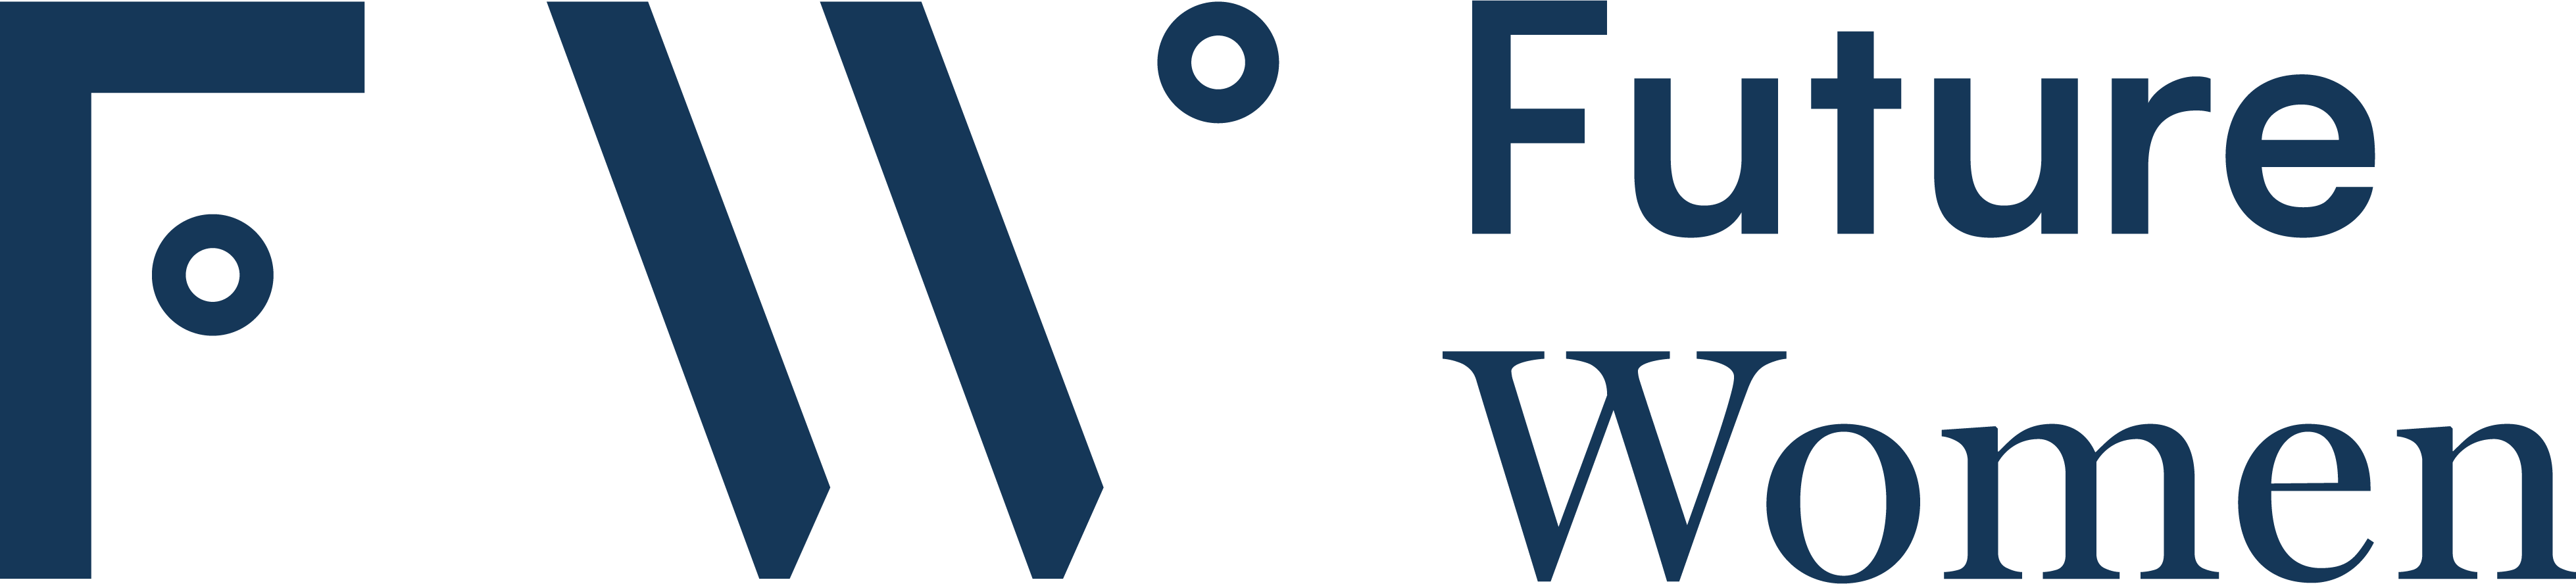 FW_Logotype_Blue